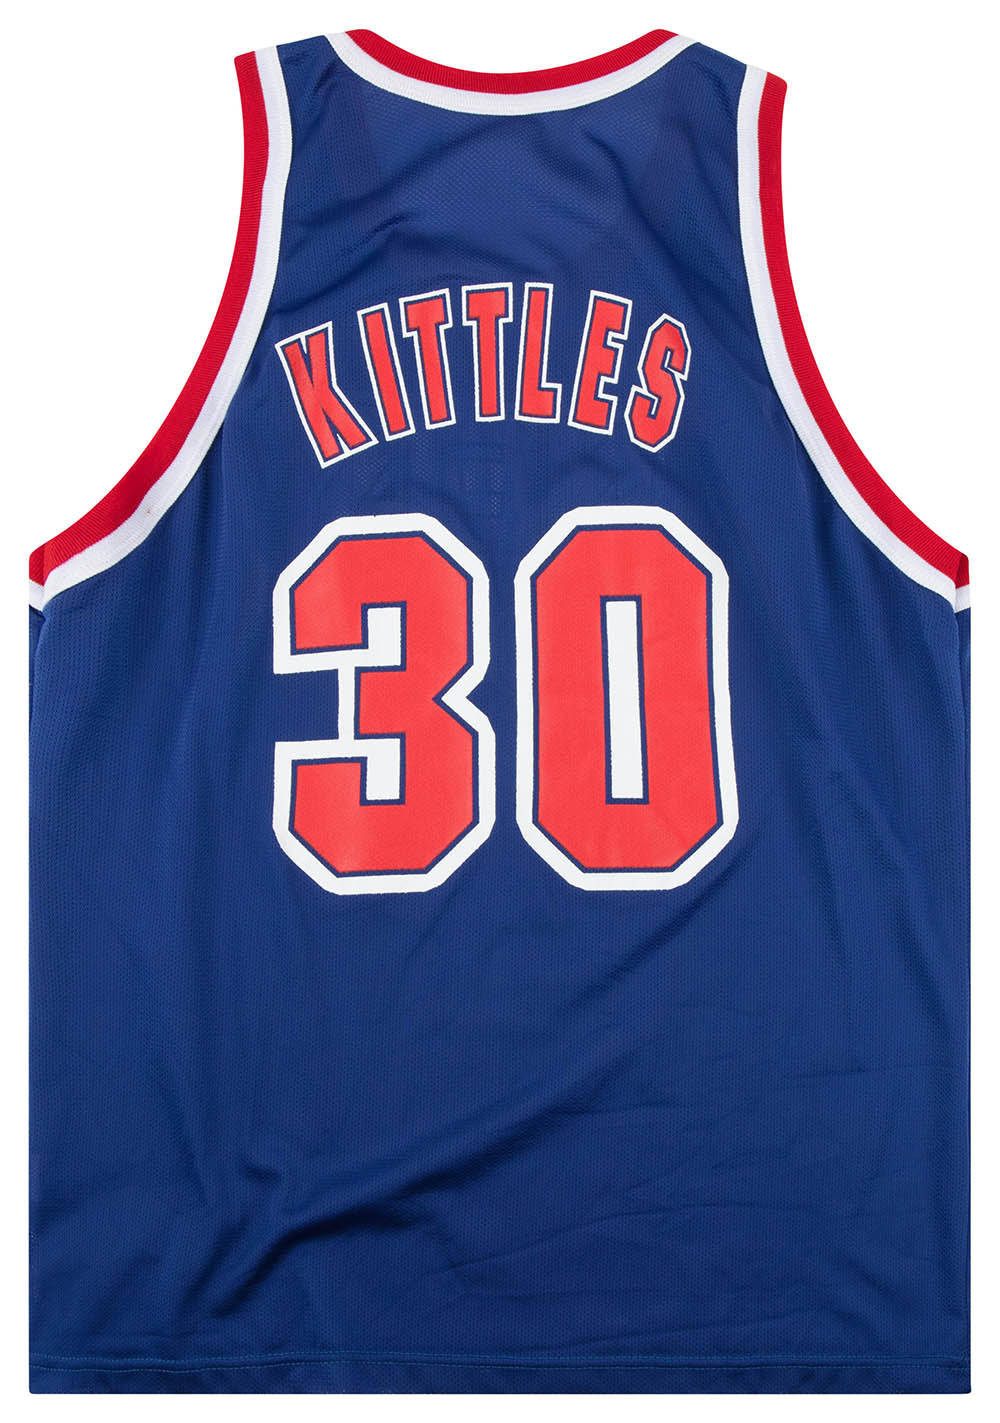 Kerry Kittles NJ Nets Champion Jersey - 5 Star Vintage